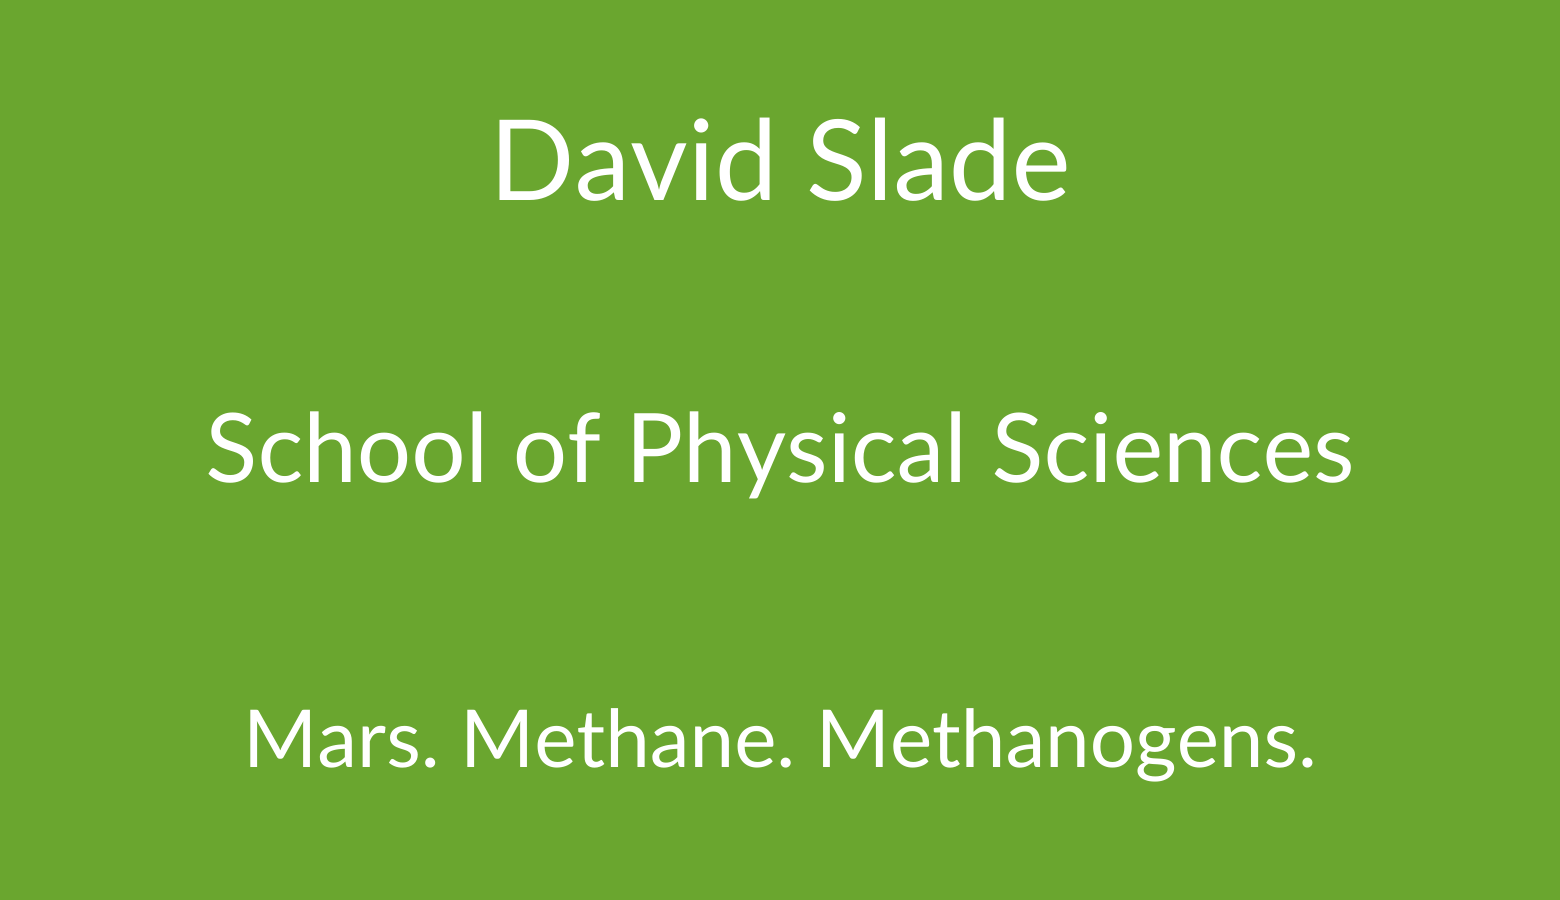 David Slade. School of Physical Sciences. Mars. Methane, Methanogens.